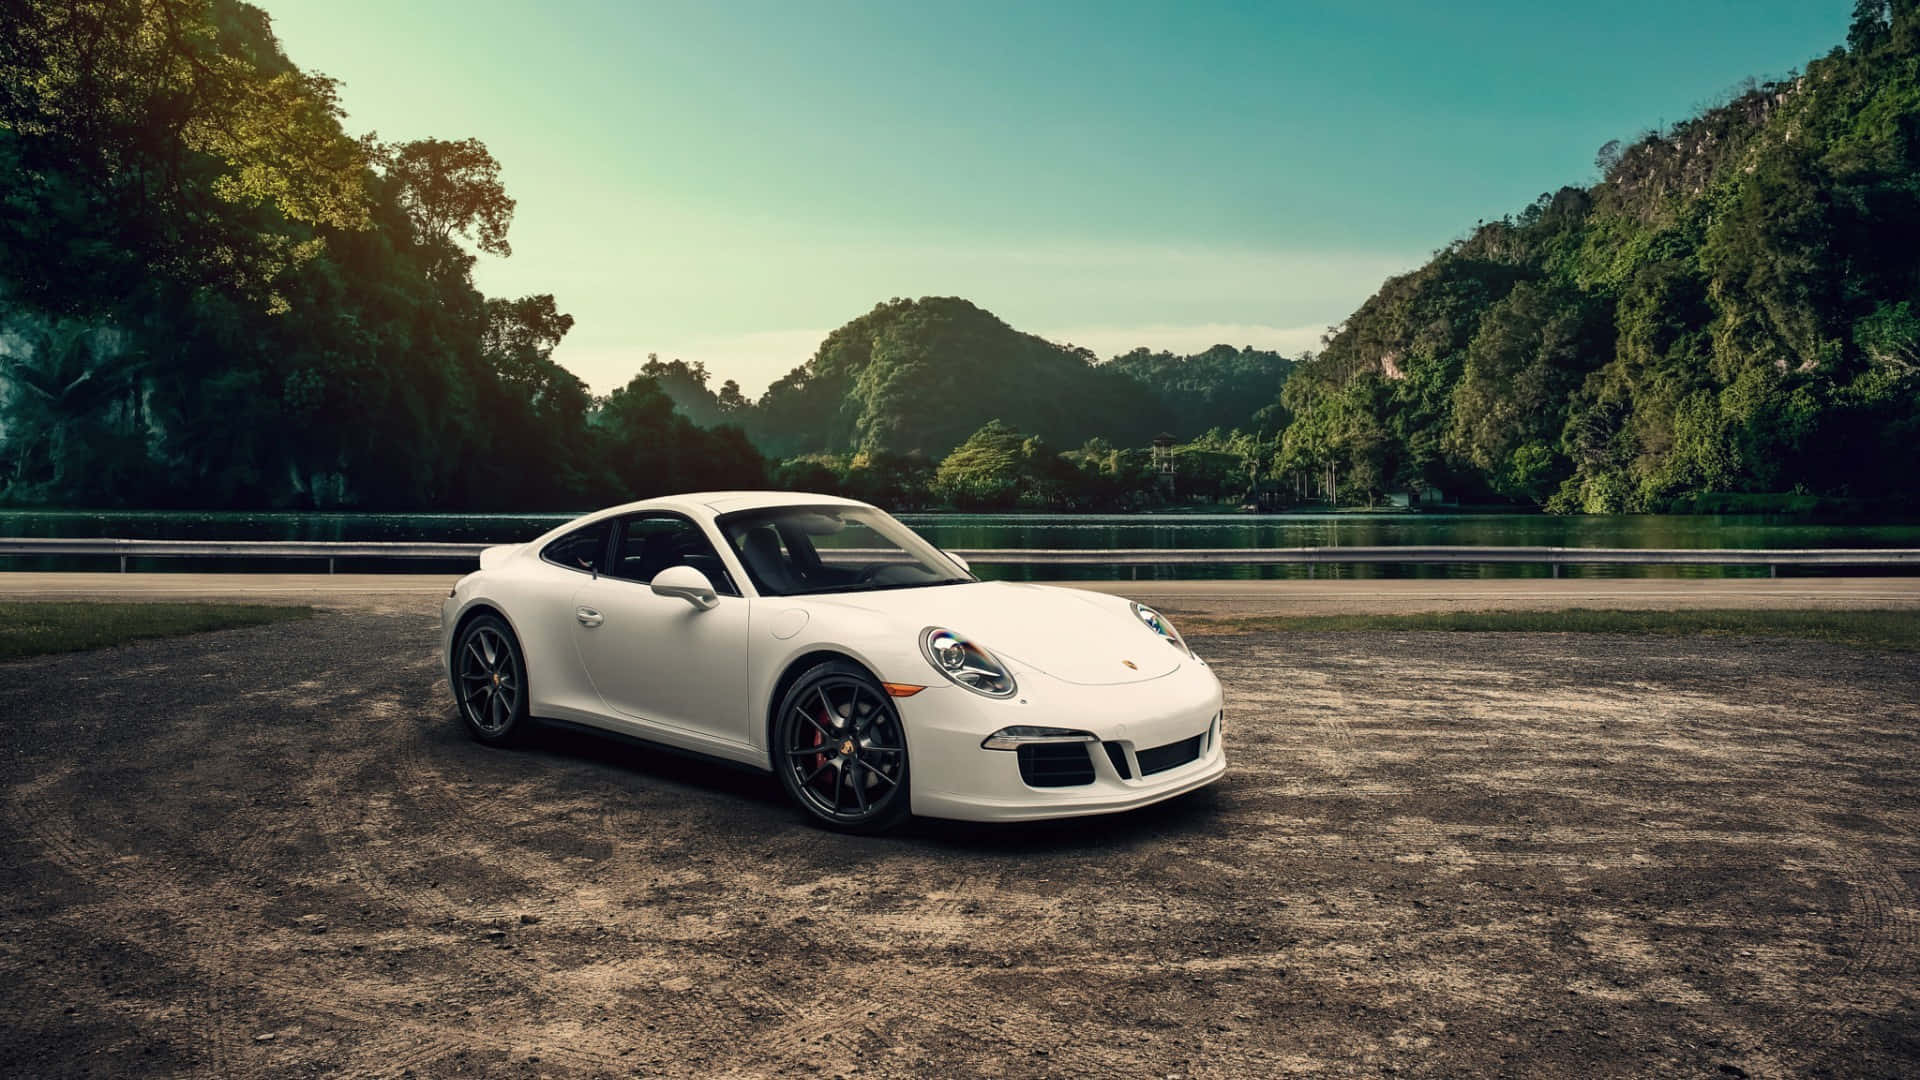 Sleek and Powerful Porsche on a Race Track